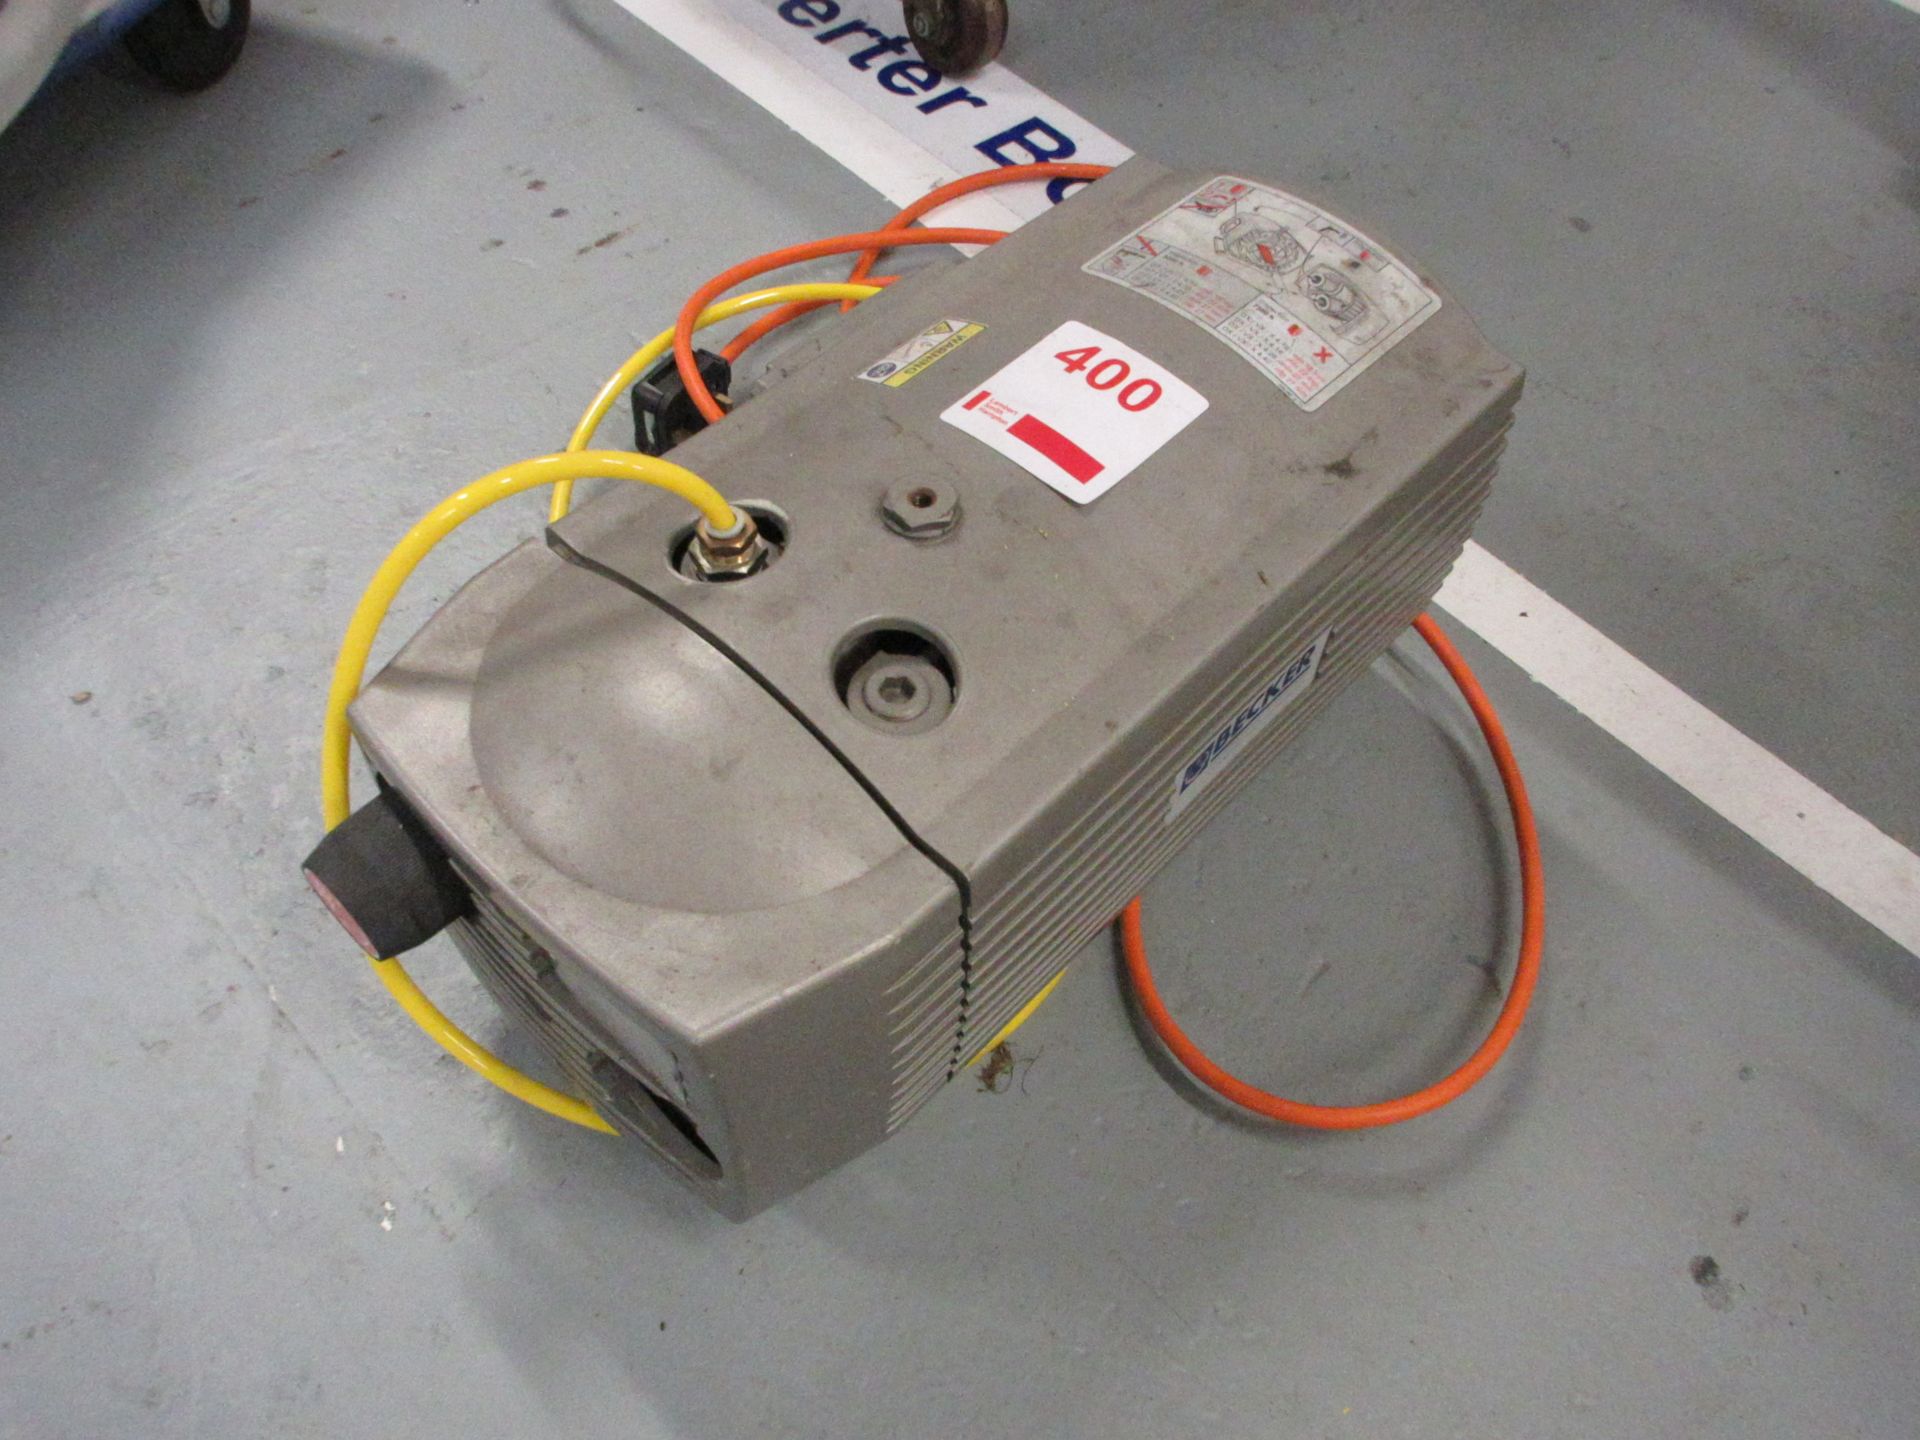 Becker vacuum pump, type VT4.16, serial no. 2378195 inlet capacity 16/19, max vacuum 150/150mbar (